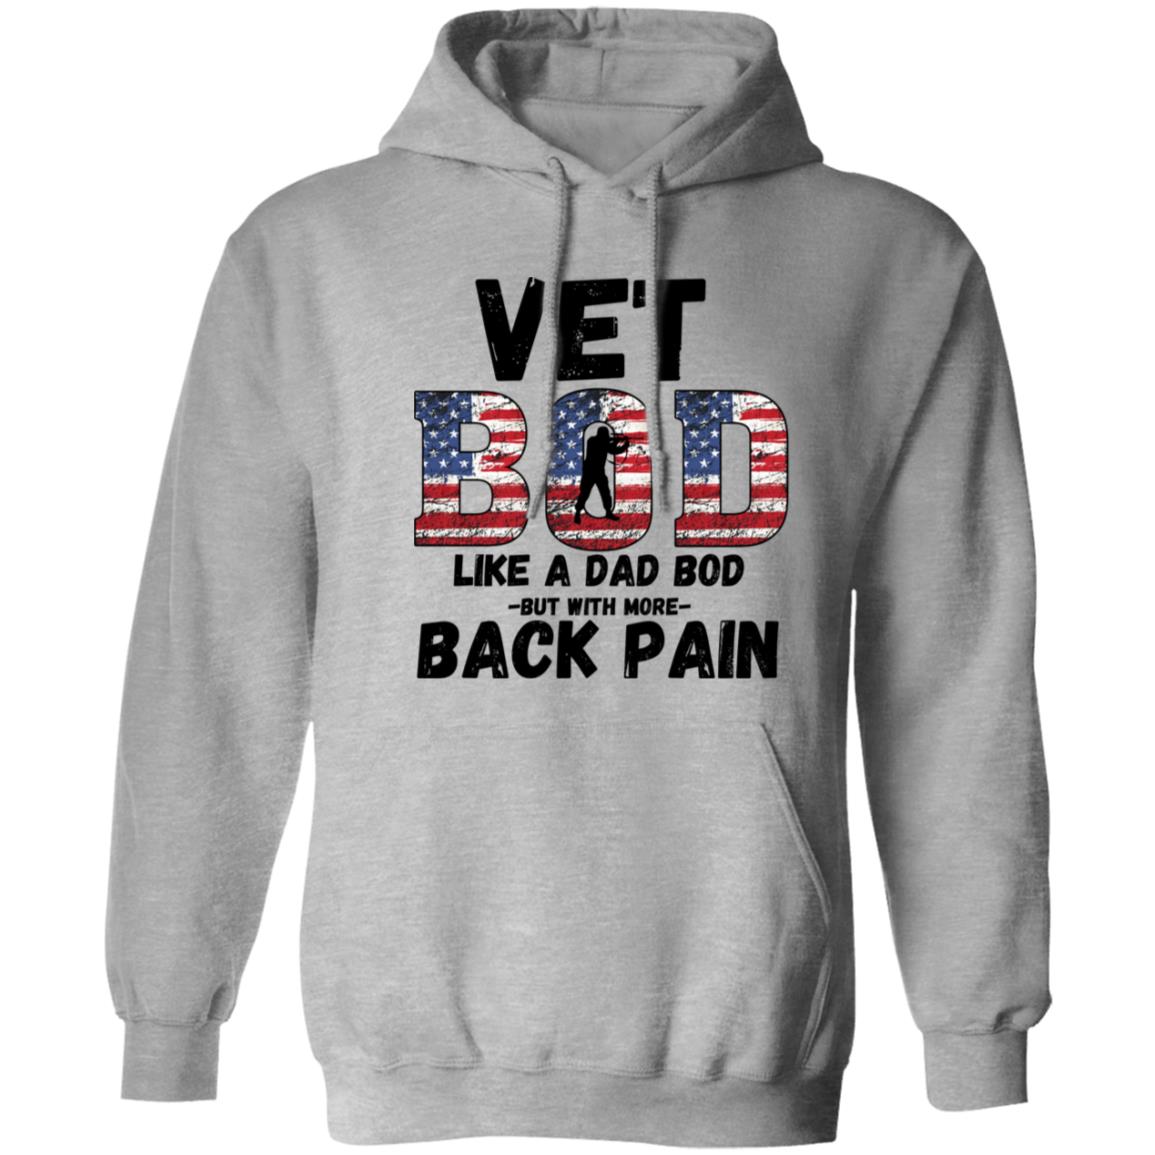 Vet Bod / Back Pain (Veterans)  - Pullover Hoodie 8 oz (Closeout)